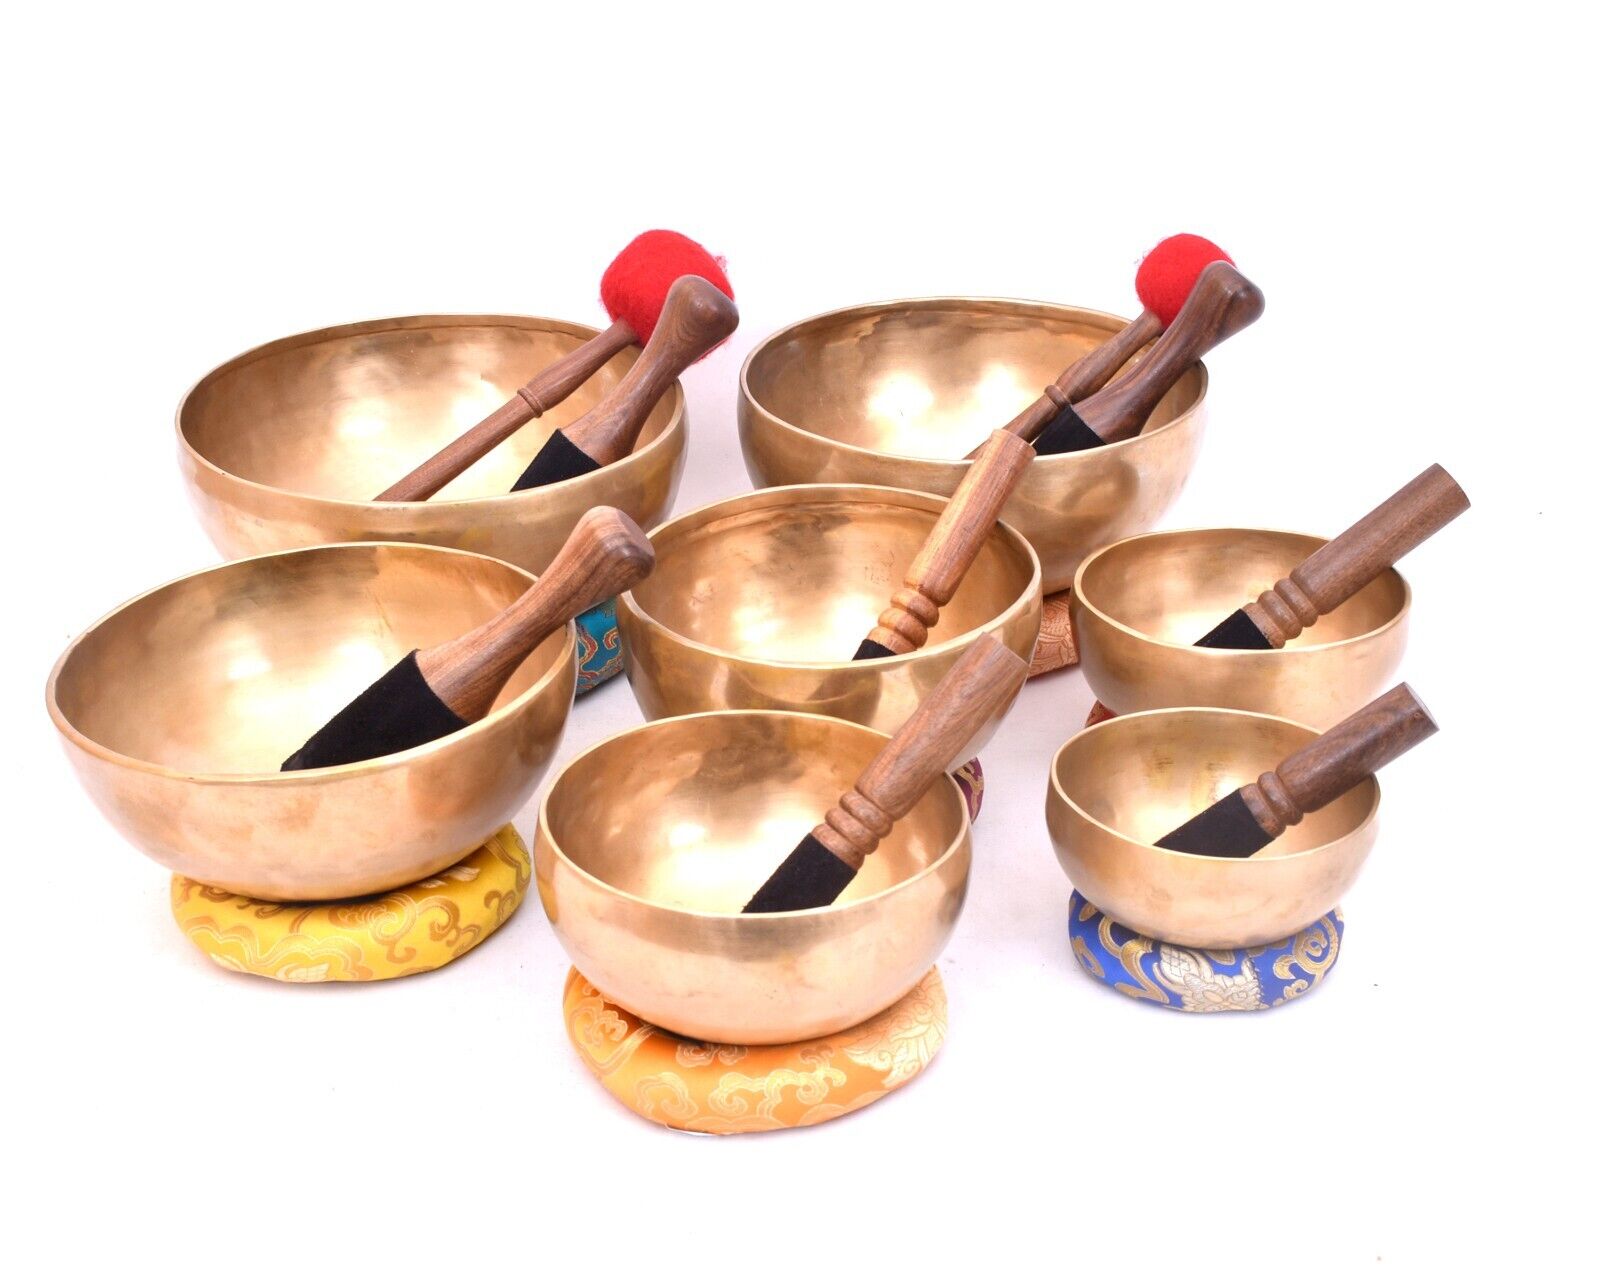 Singing bowl set of 7 - Handmade 7 note chakra healing bowls - Tibetan Bowls